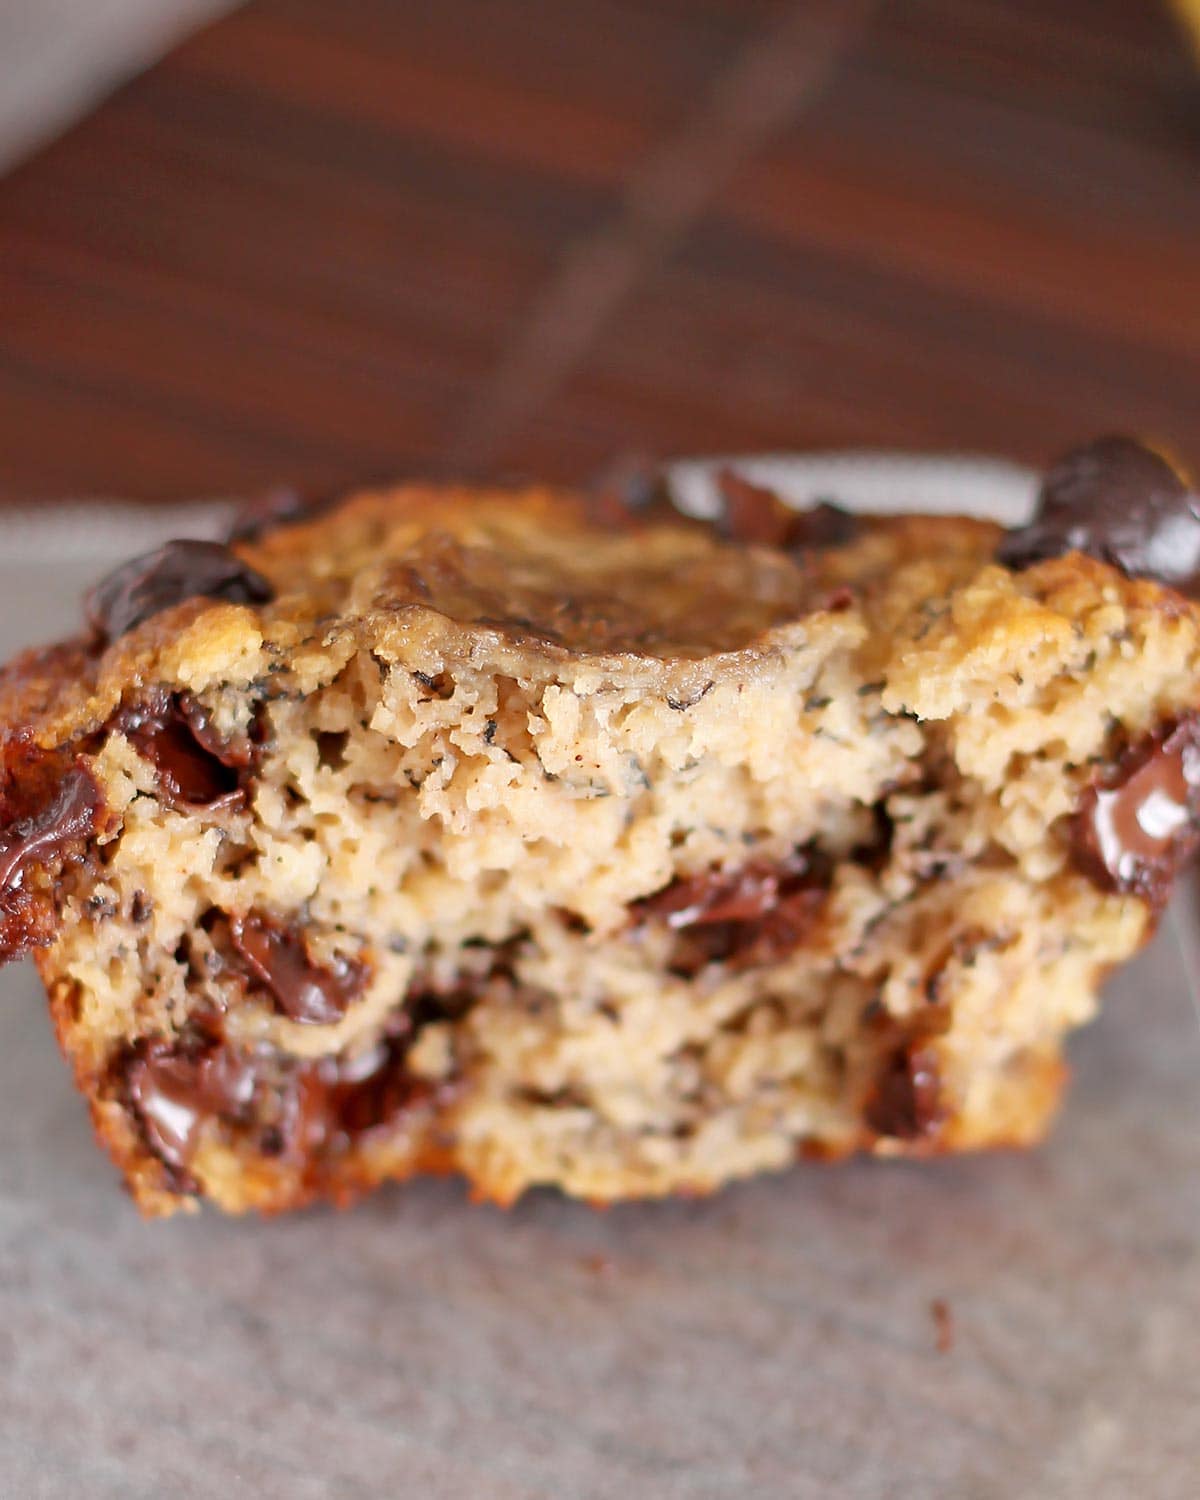 Inside chocolate chip banana bread muffin